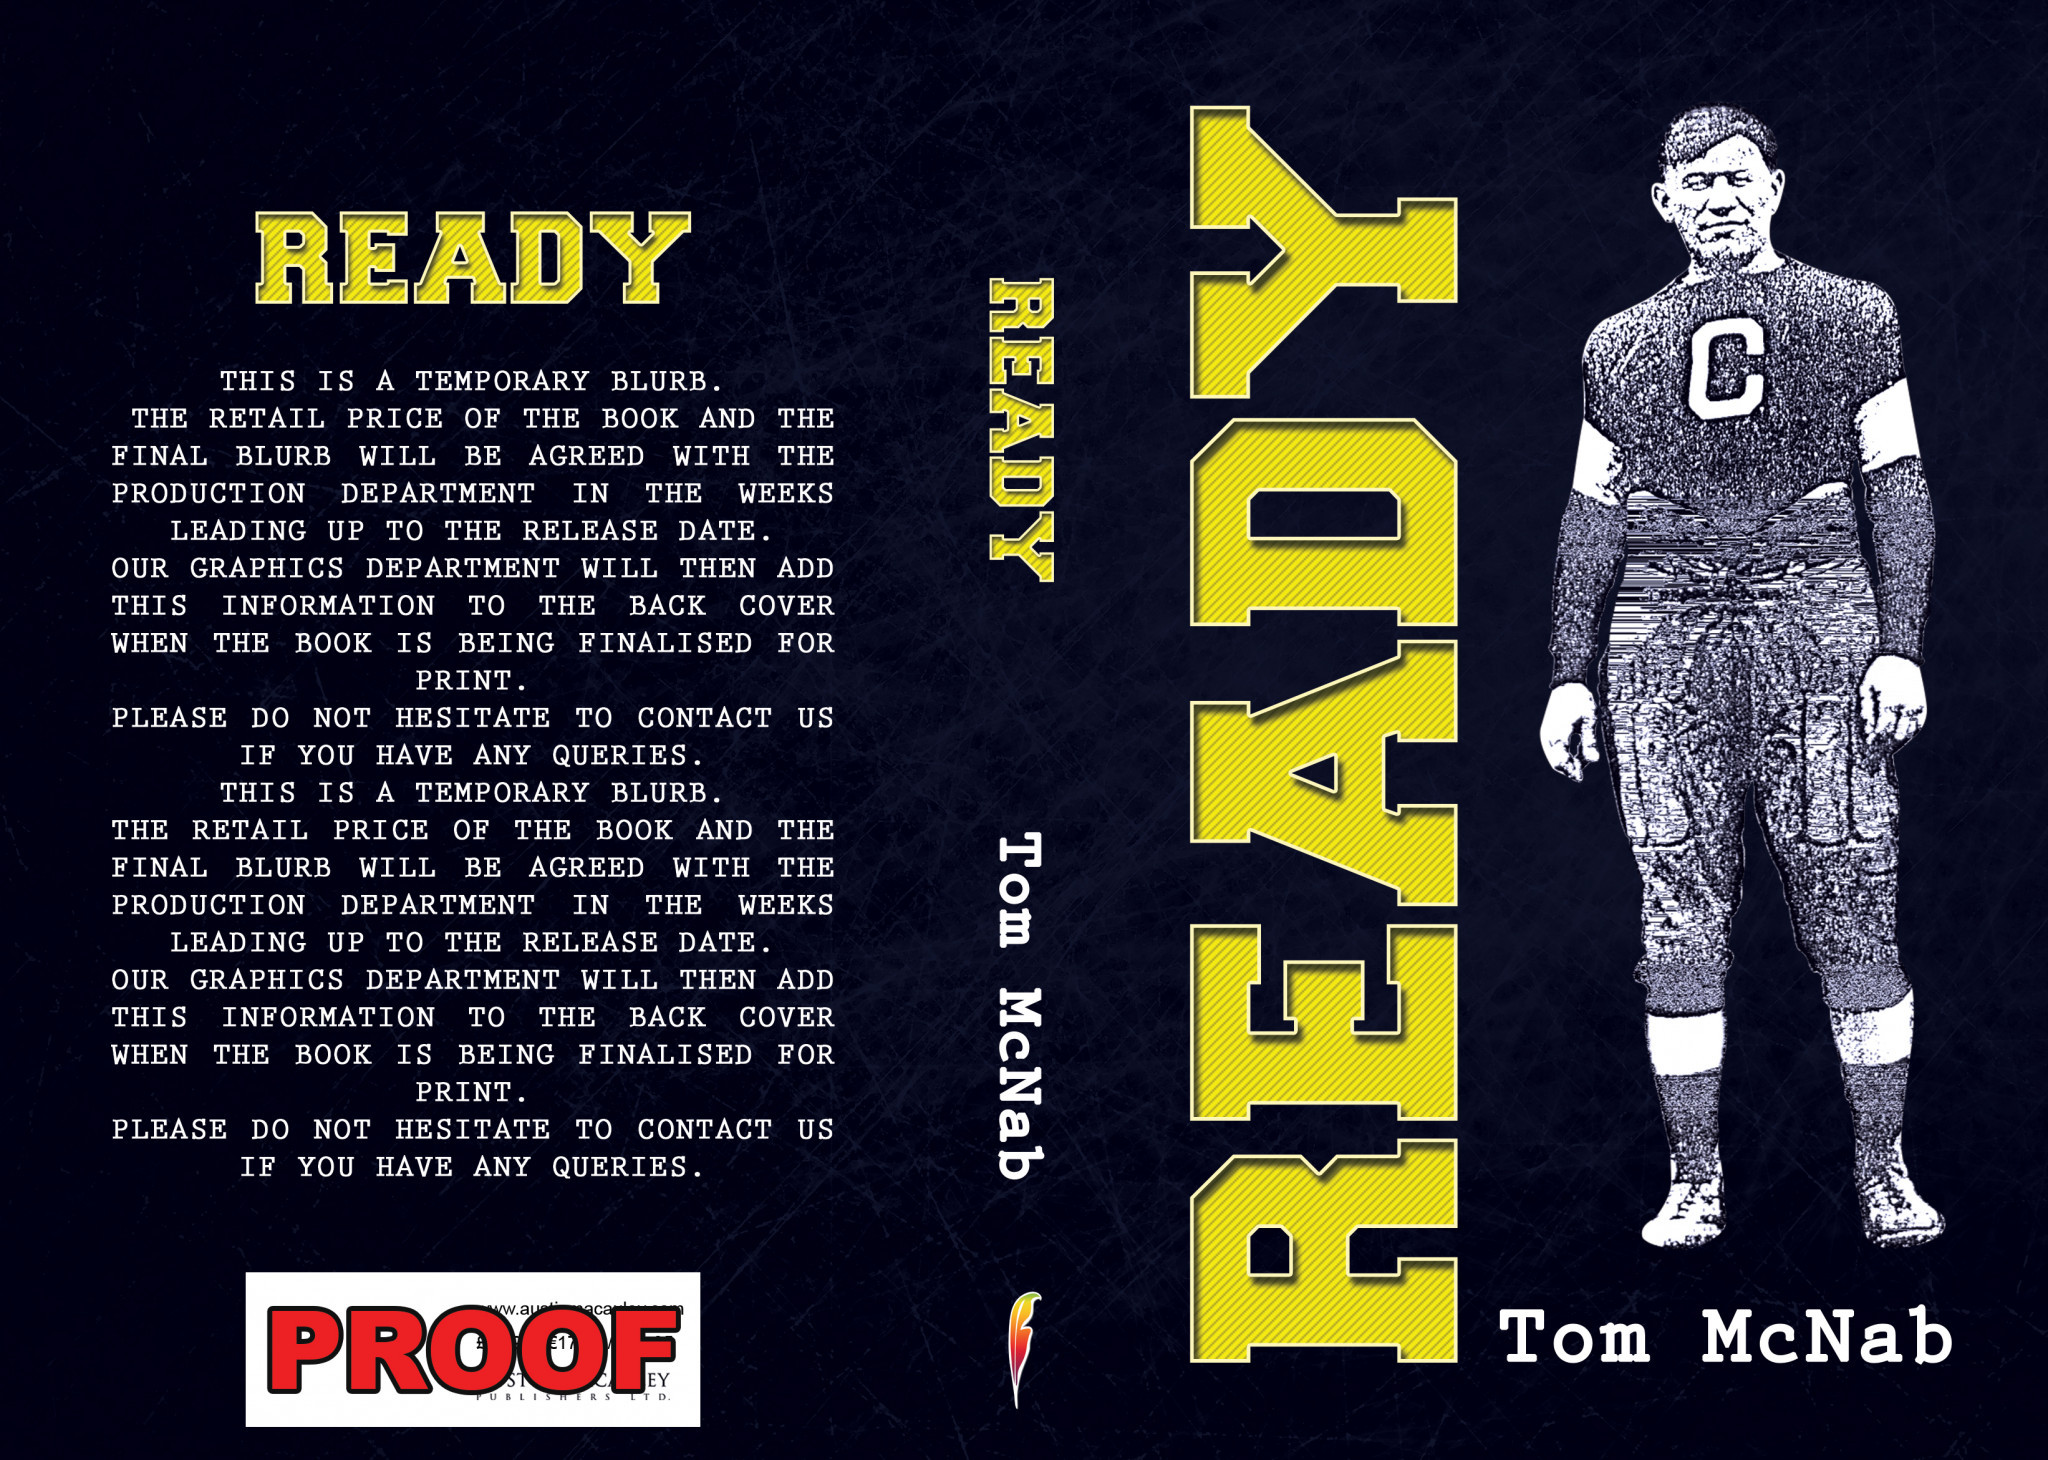 Jim Thorpe inspired a Tom McNab novel ©Tom McNab